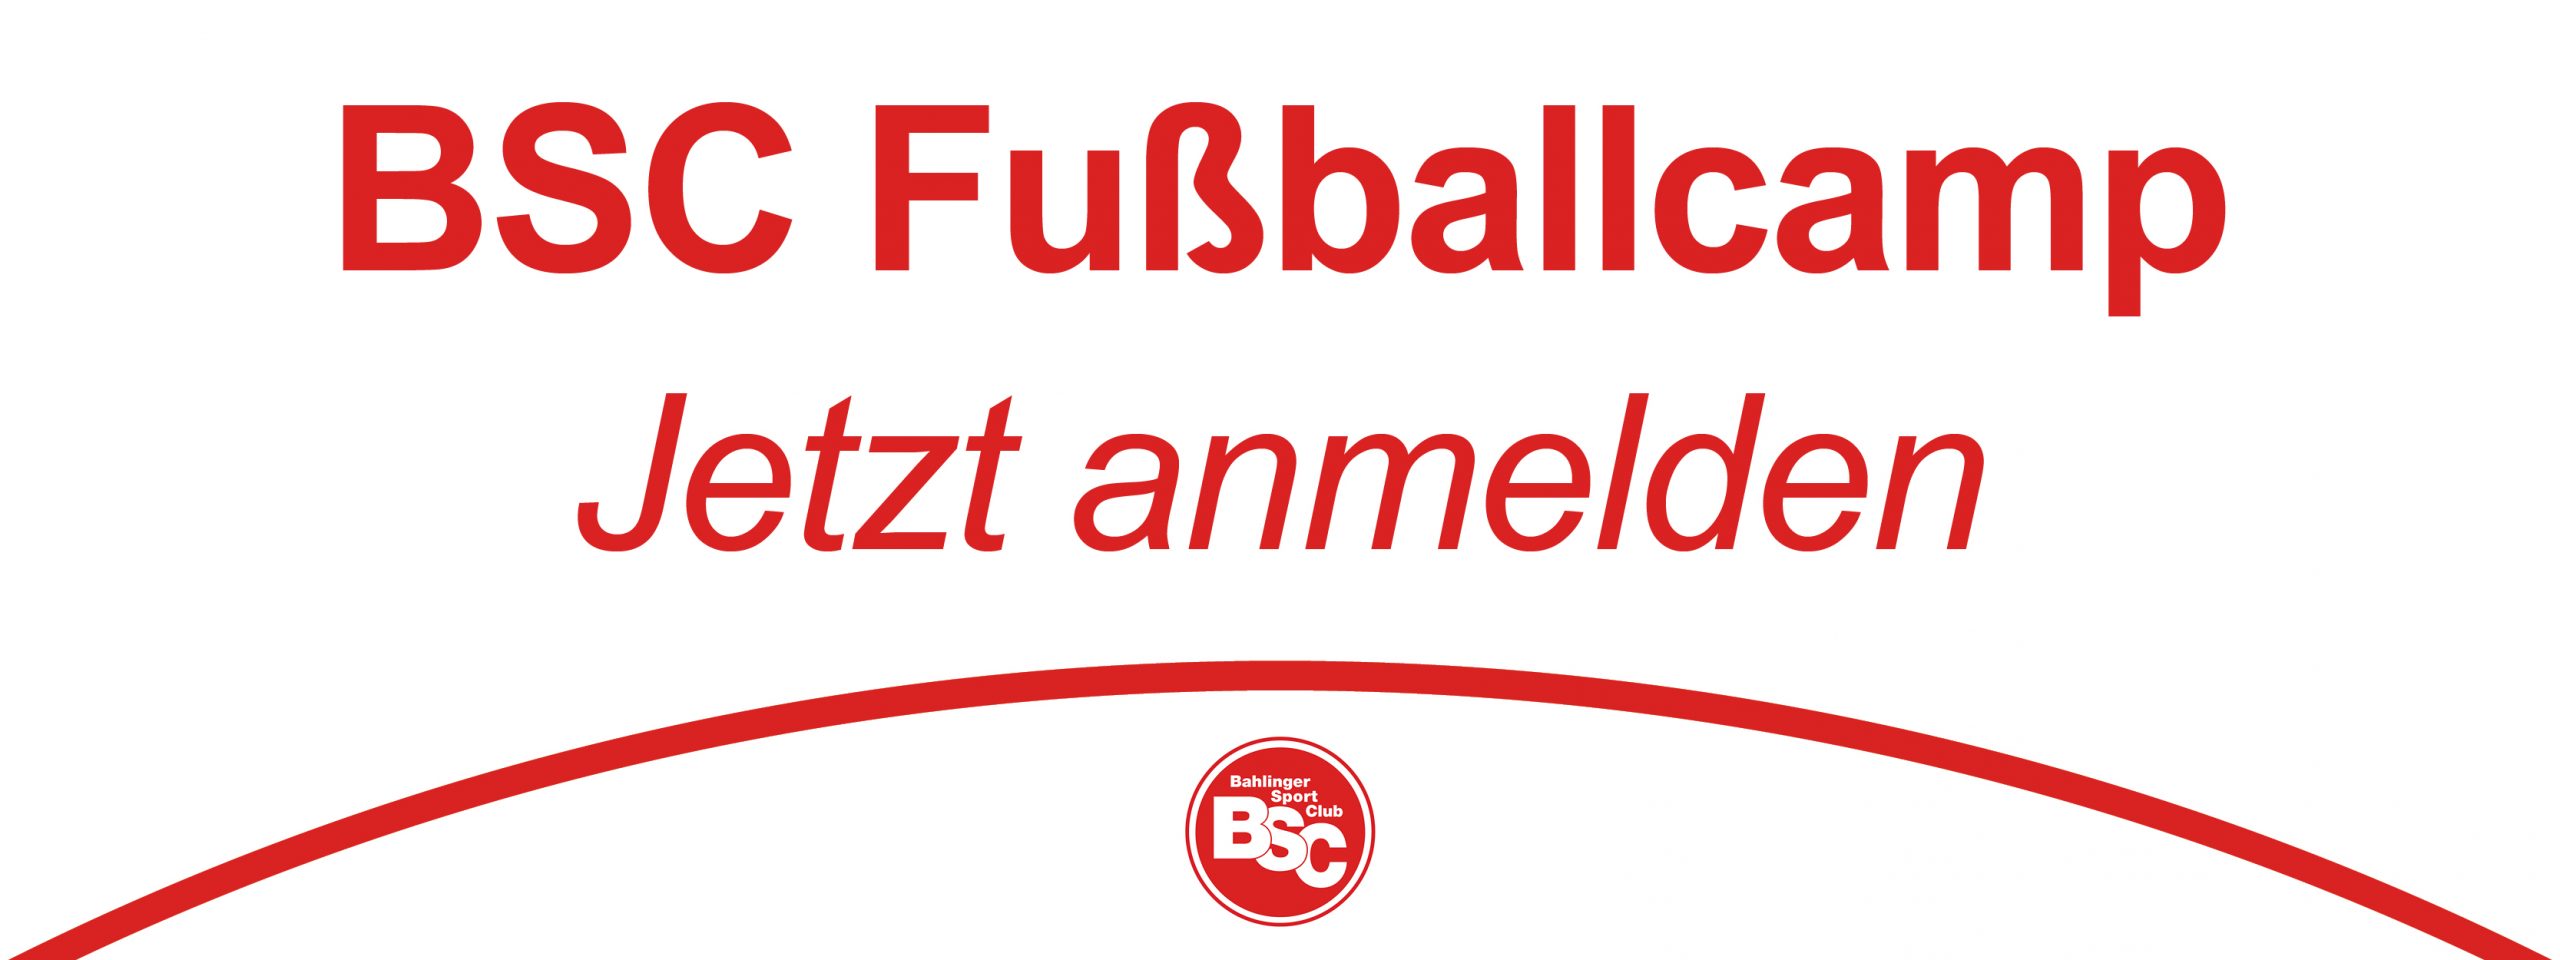 Fussball DFB original Lizenzlogo Regionalliga Pin Badge Bahlinger Sport Club BSC 